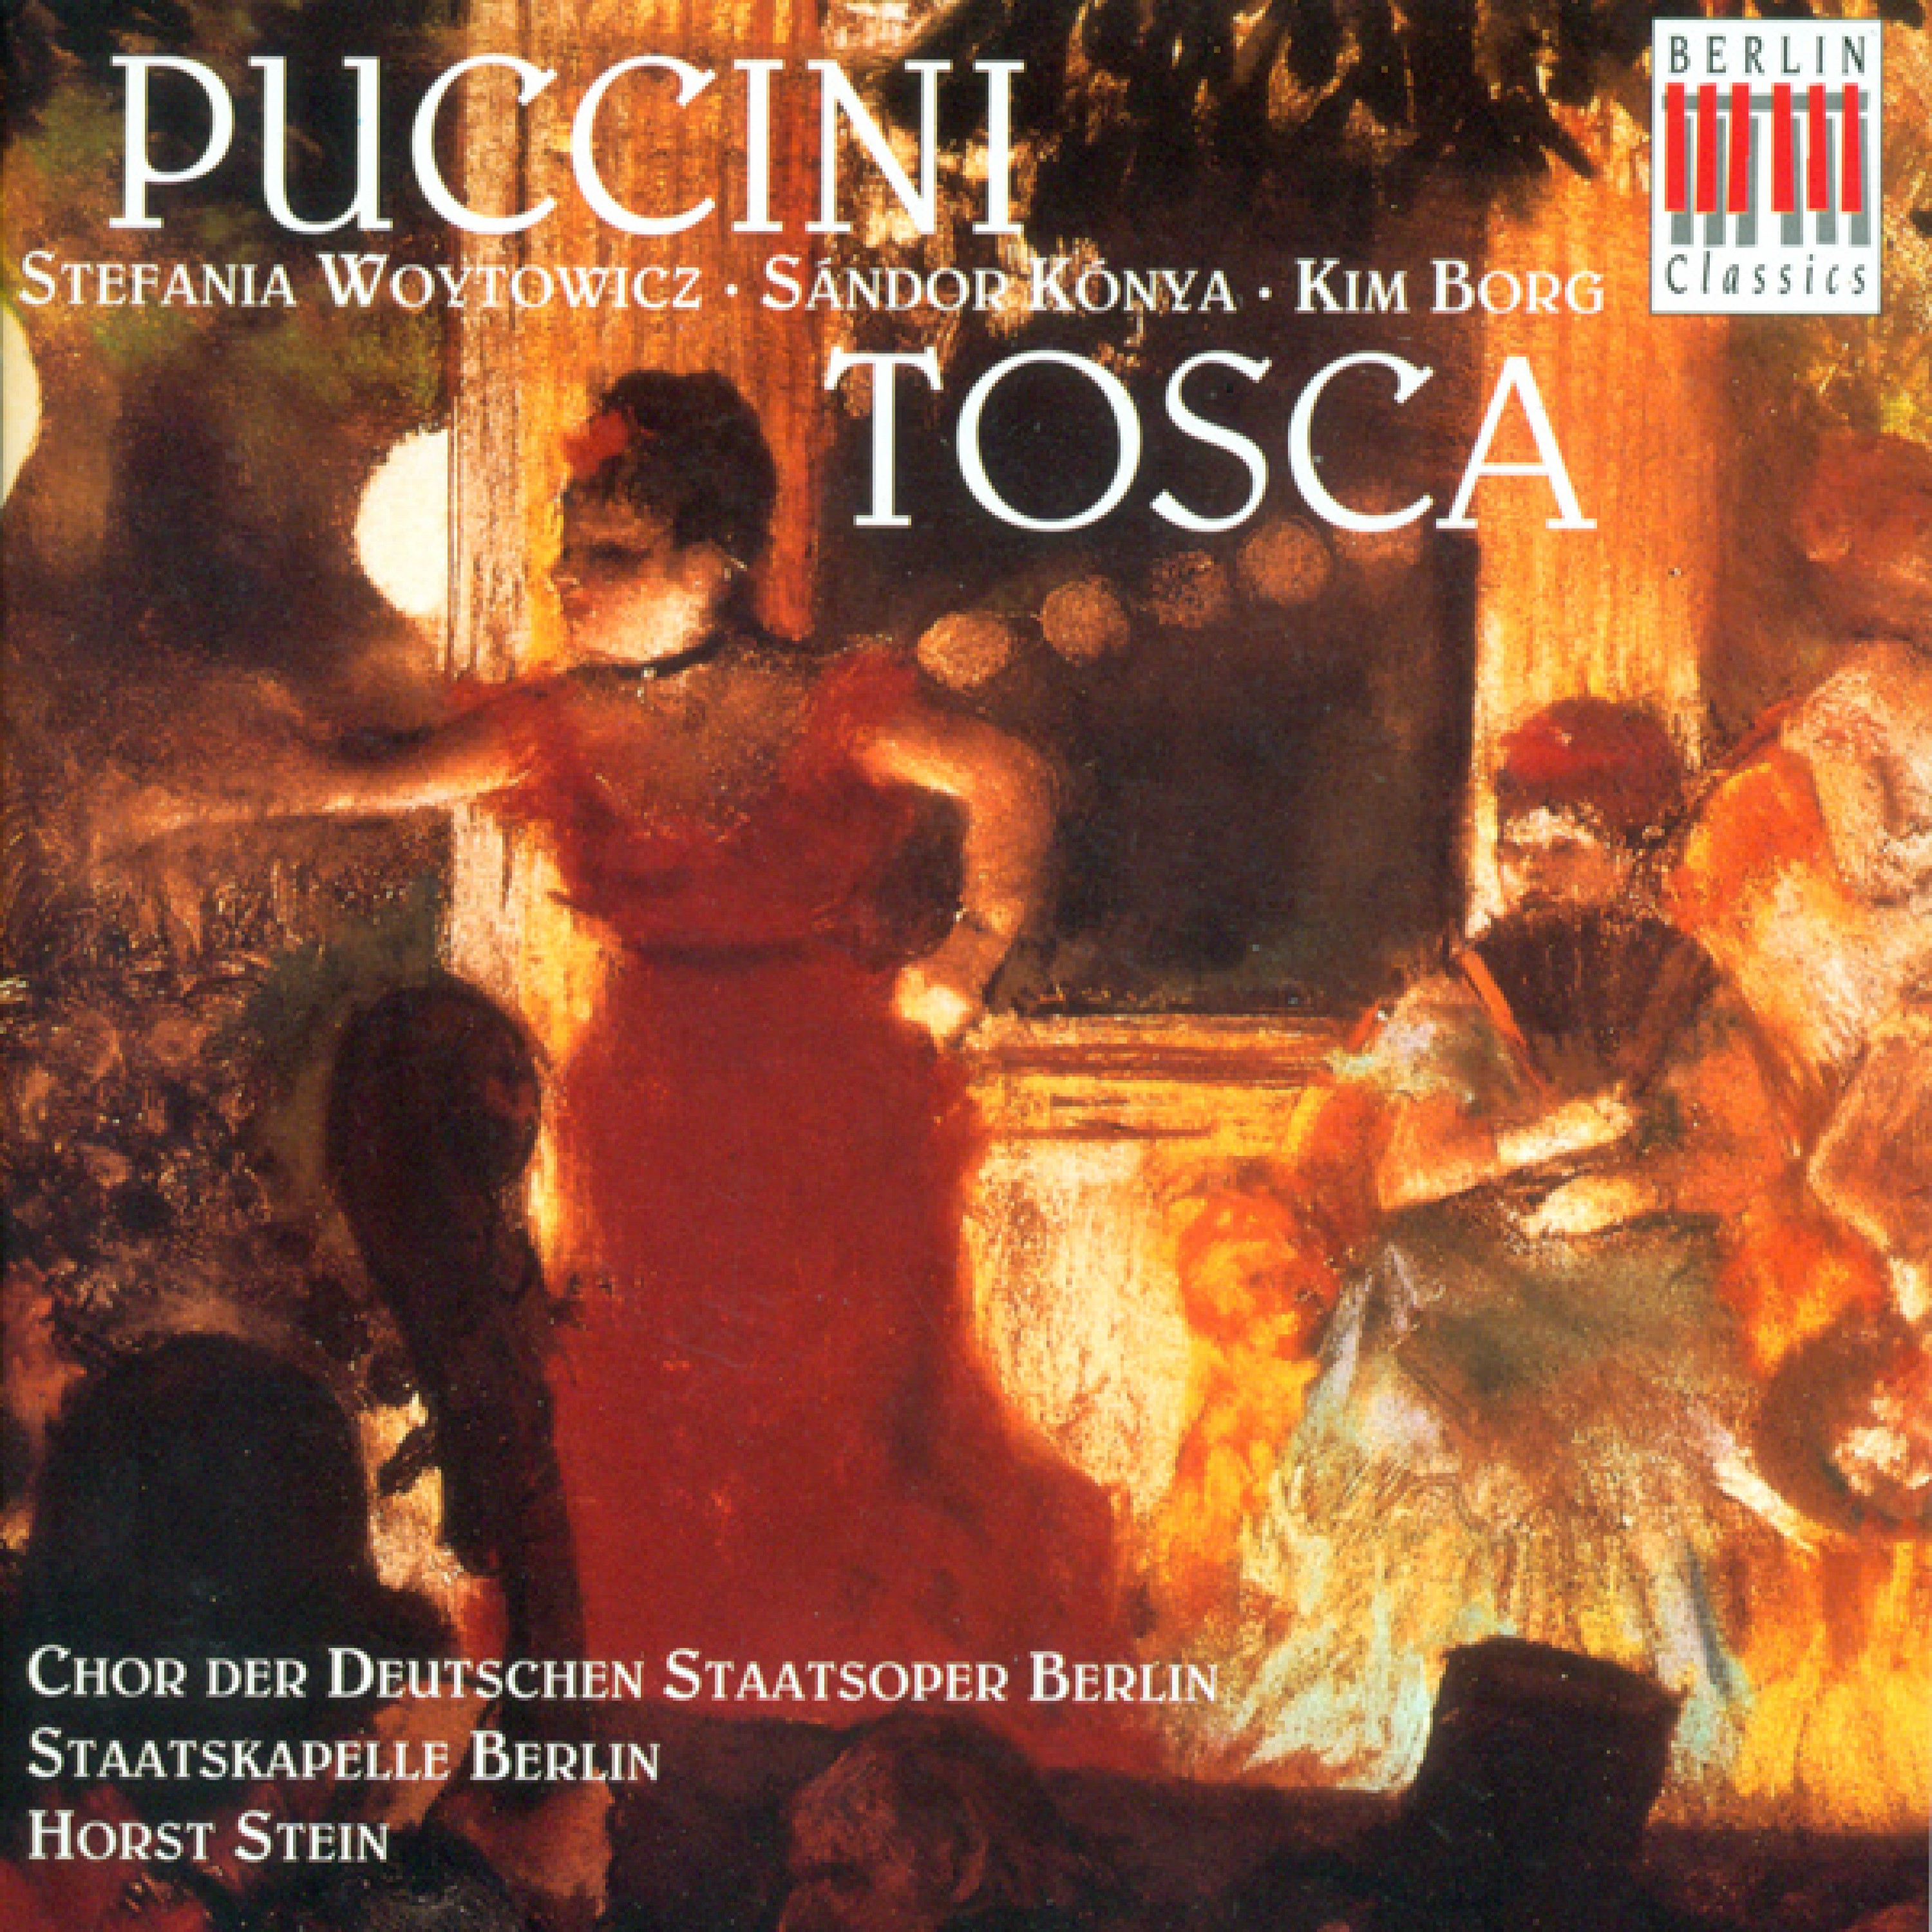 Tosca (Sung in German): Act III: Aber jetzt, Mario! Mario! (Tosca, Spoletta, Sciarrone, Chorus)